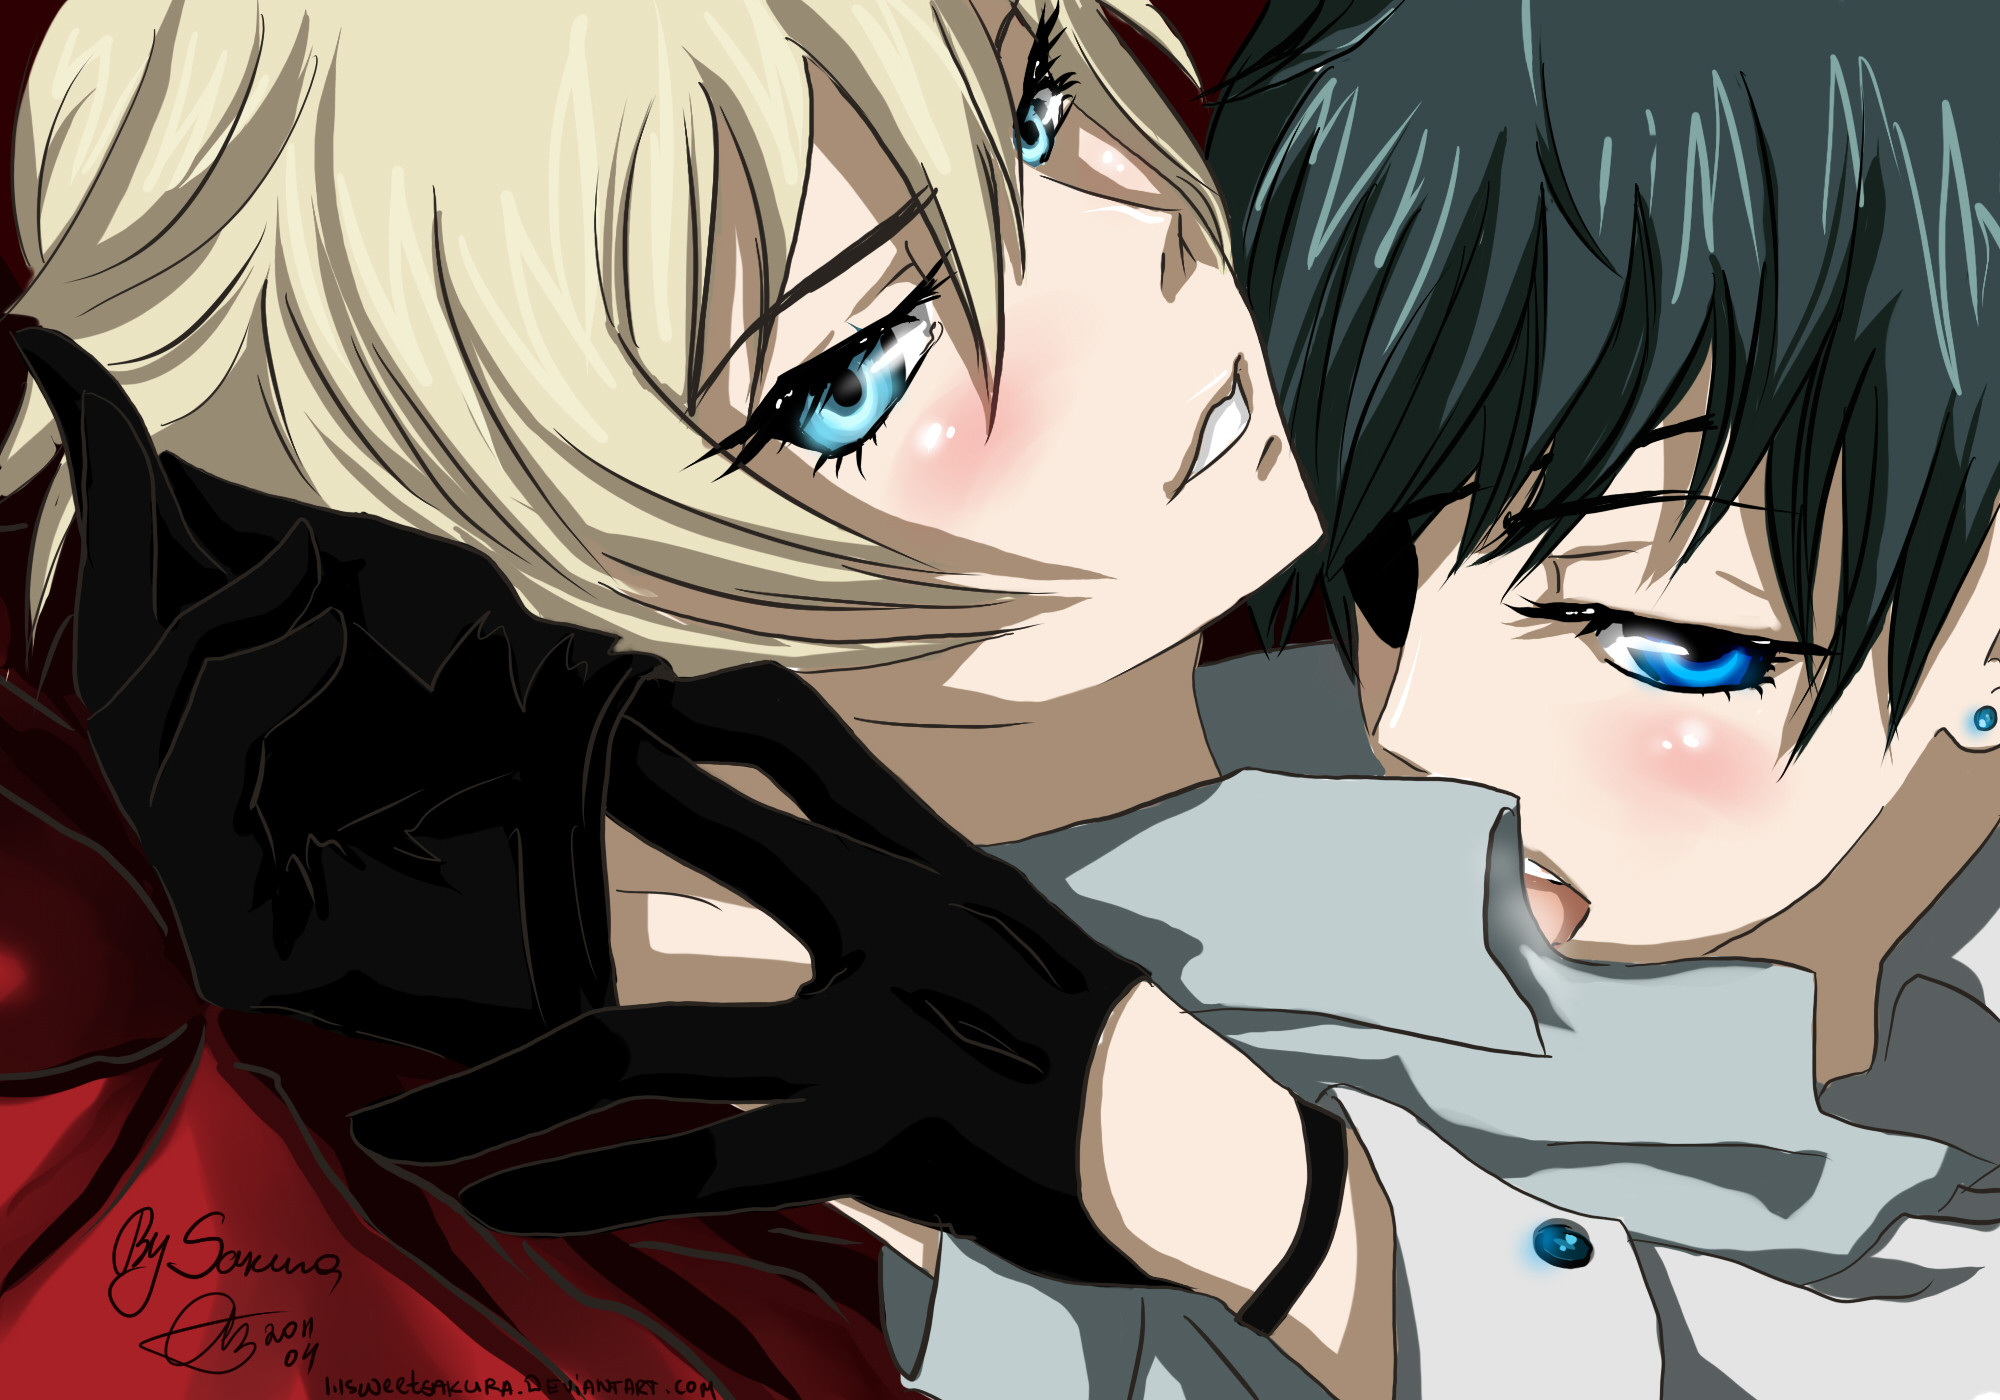 I ship Alois and Ciel harder than i ship Levi and Eren xD. 